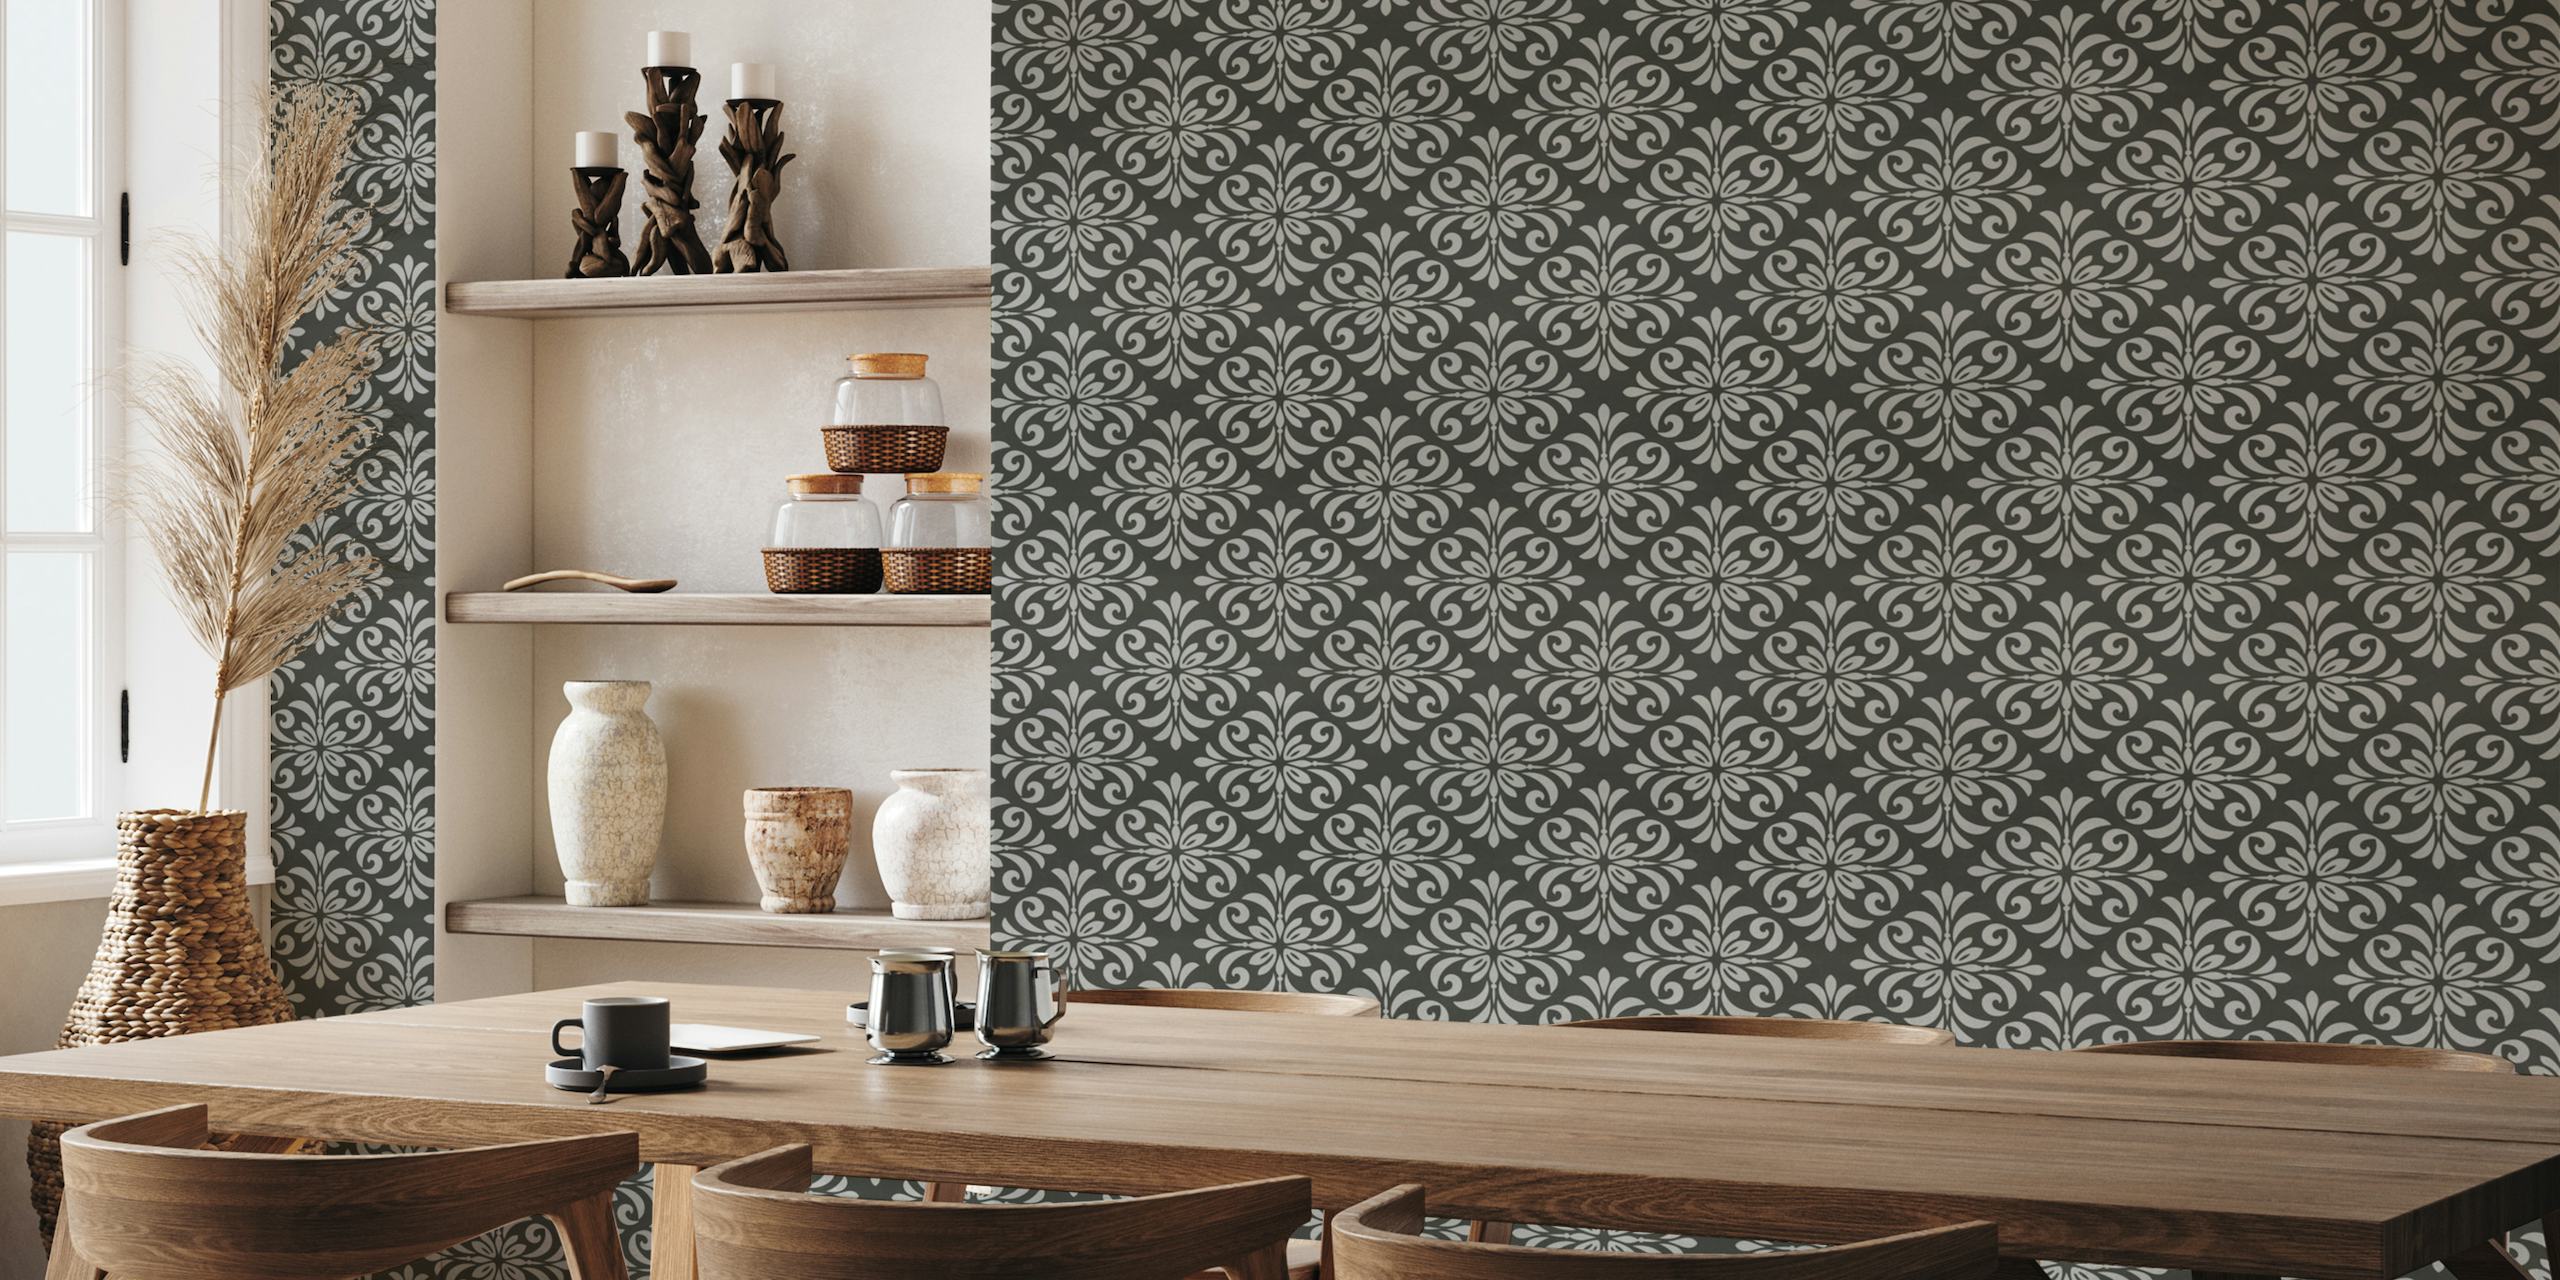 Nøytralt grått flisemønster veggmaleri med klassisk ornamentdesign